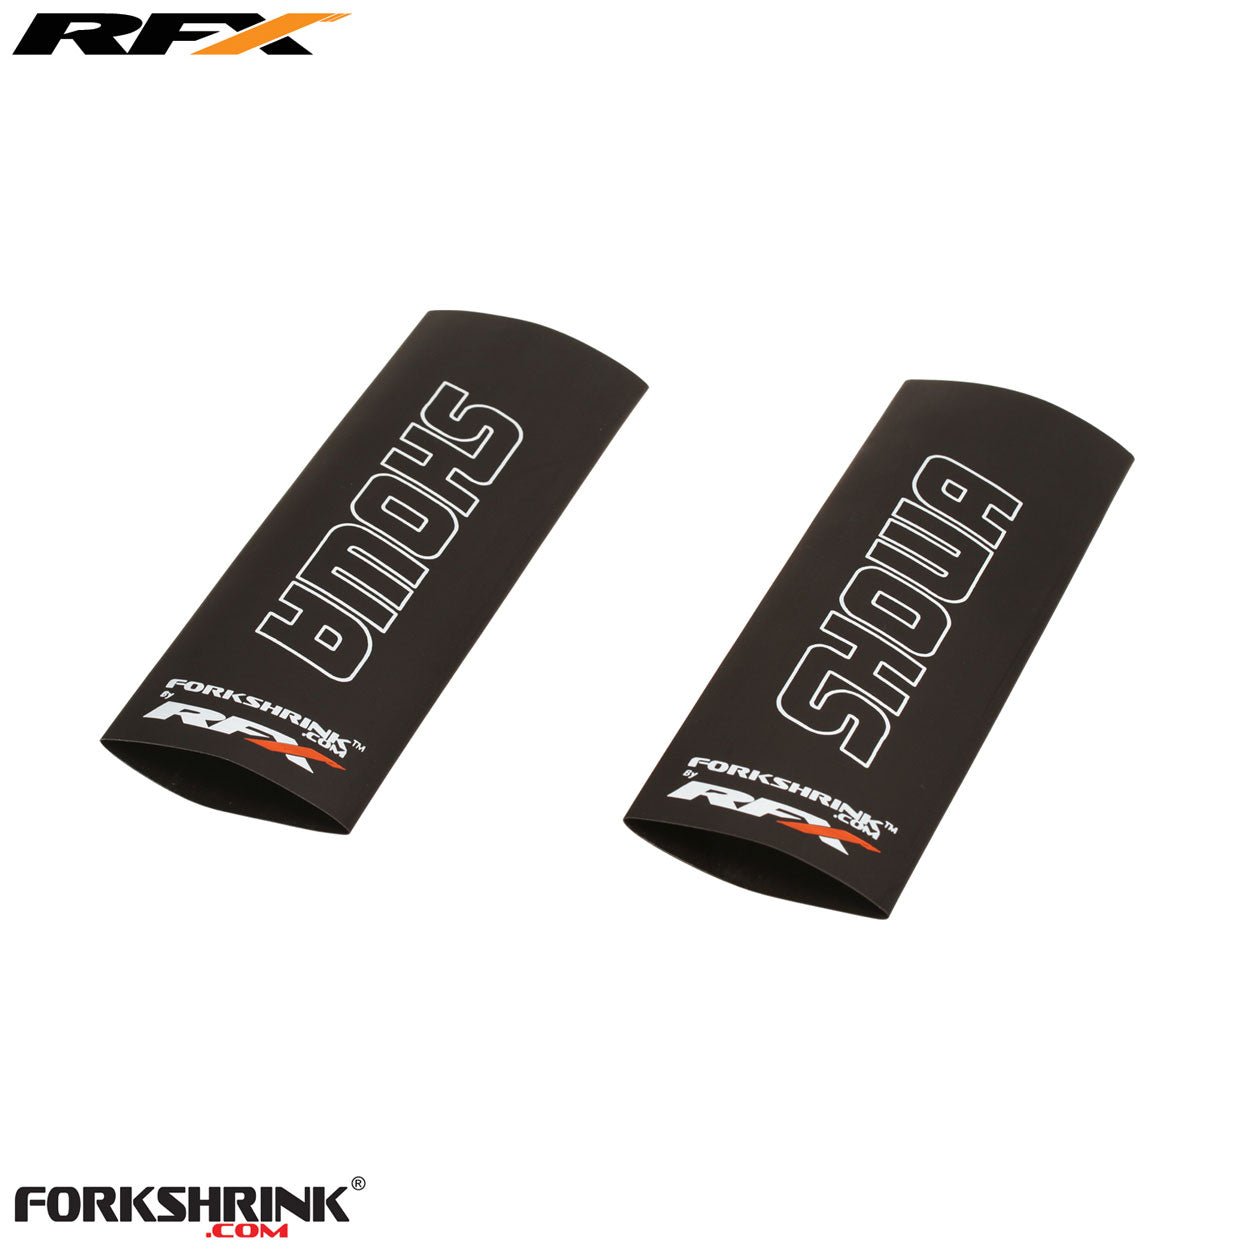 RFX Race Series Forkshrink Upper Fork Guard with Showa logo (White) Universal 85cc - White - RFX